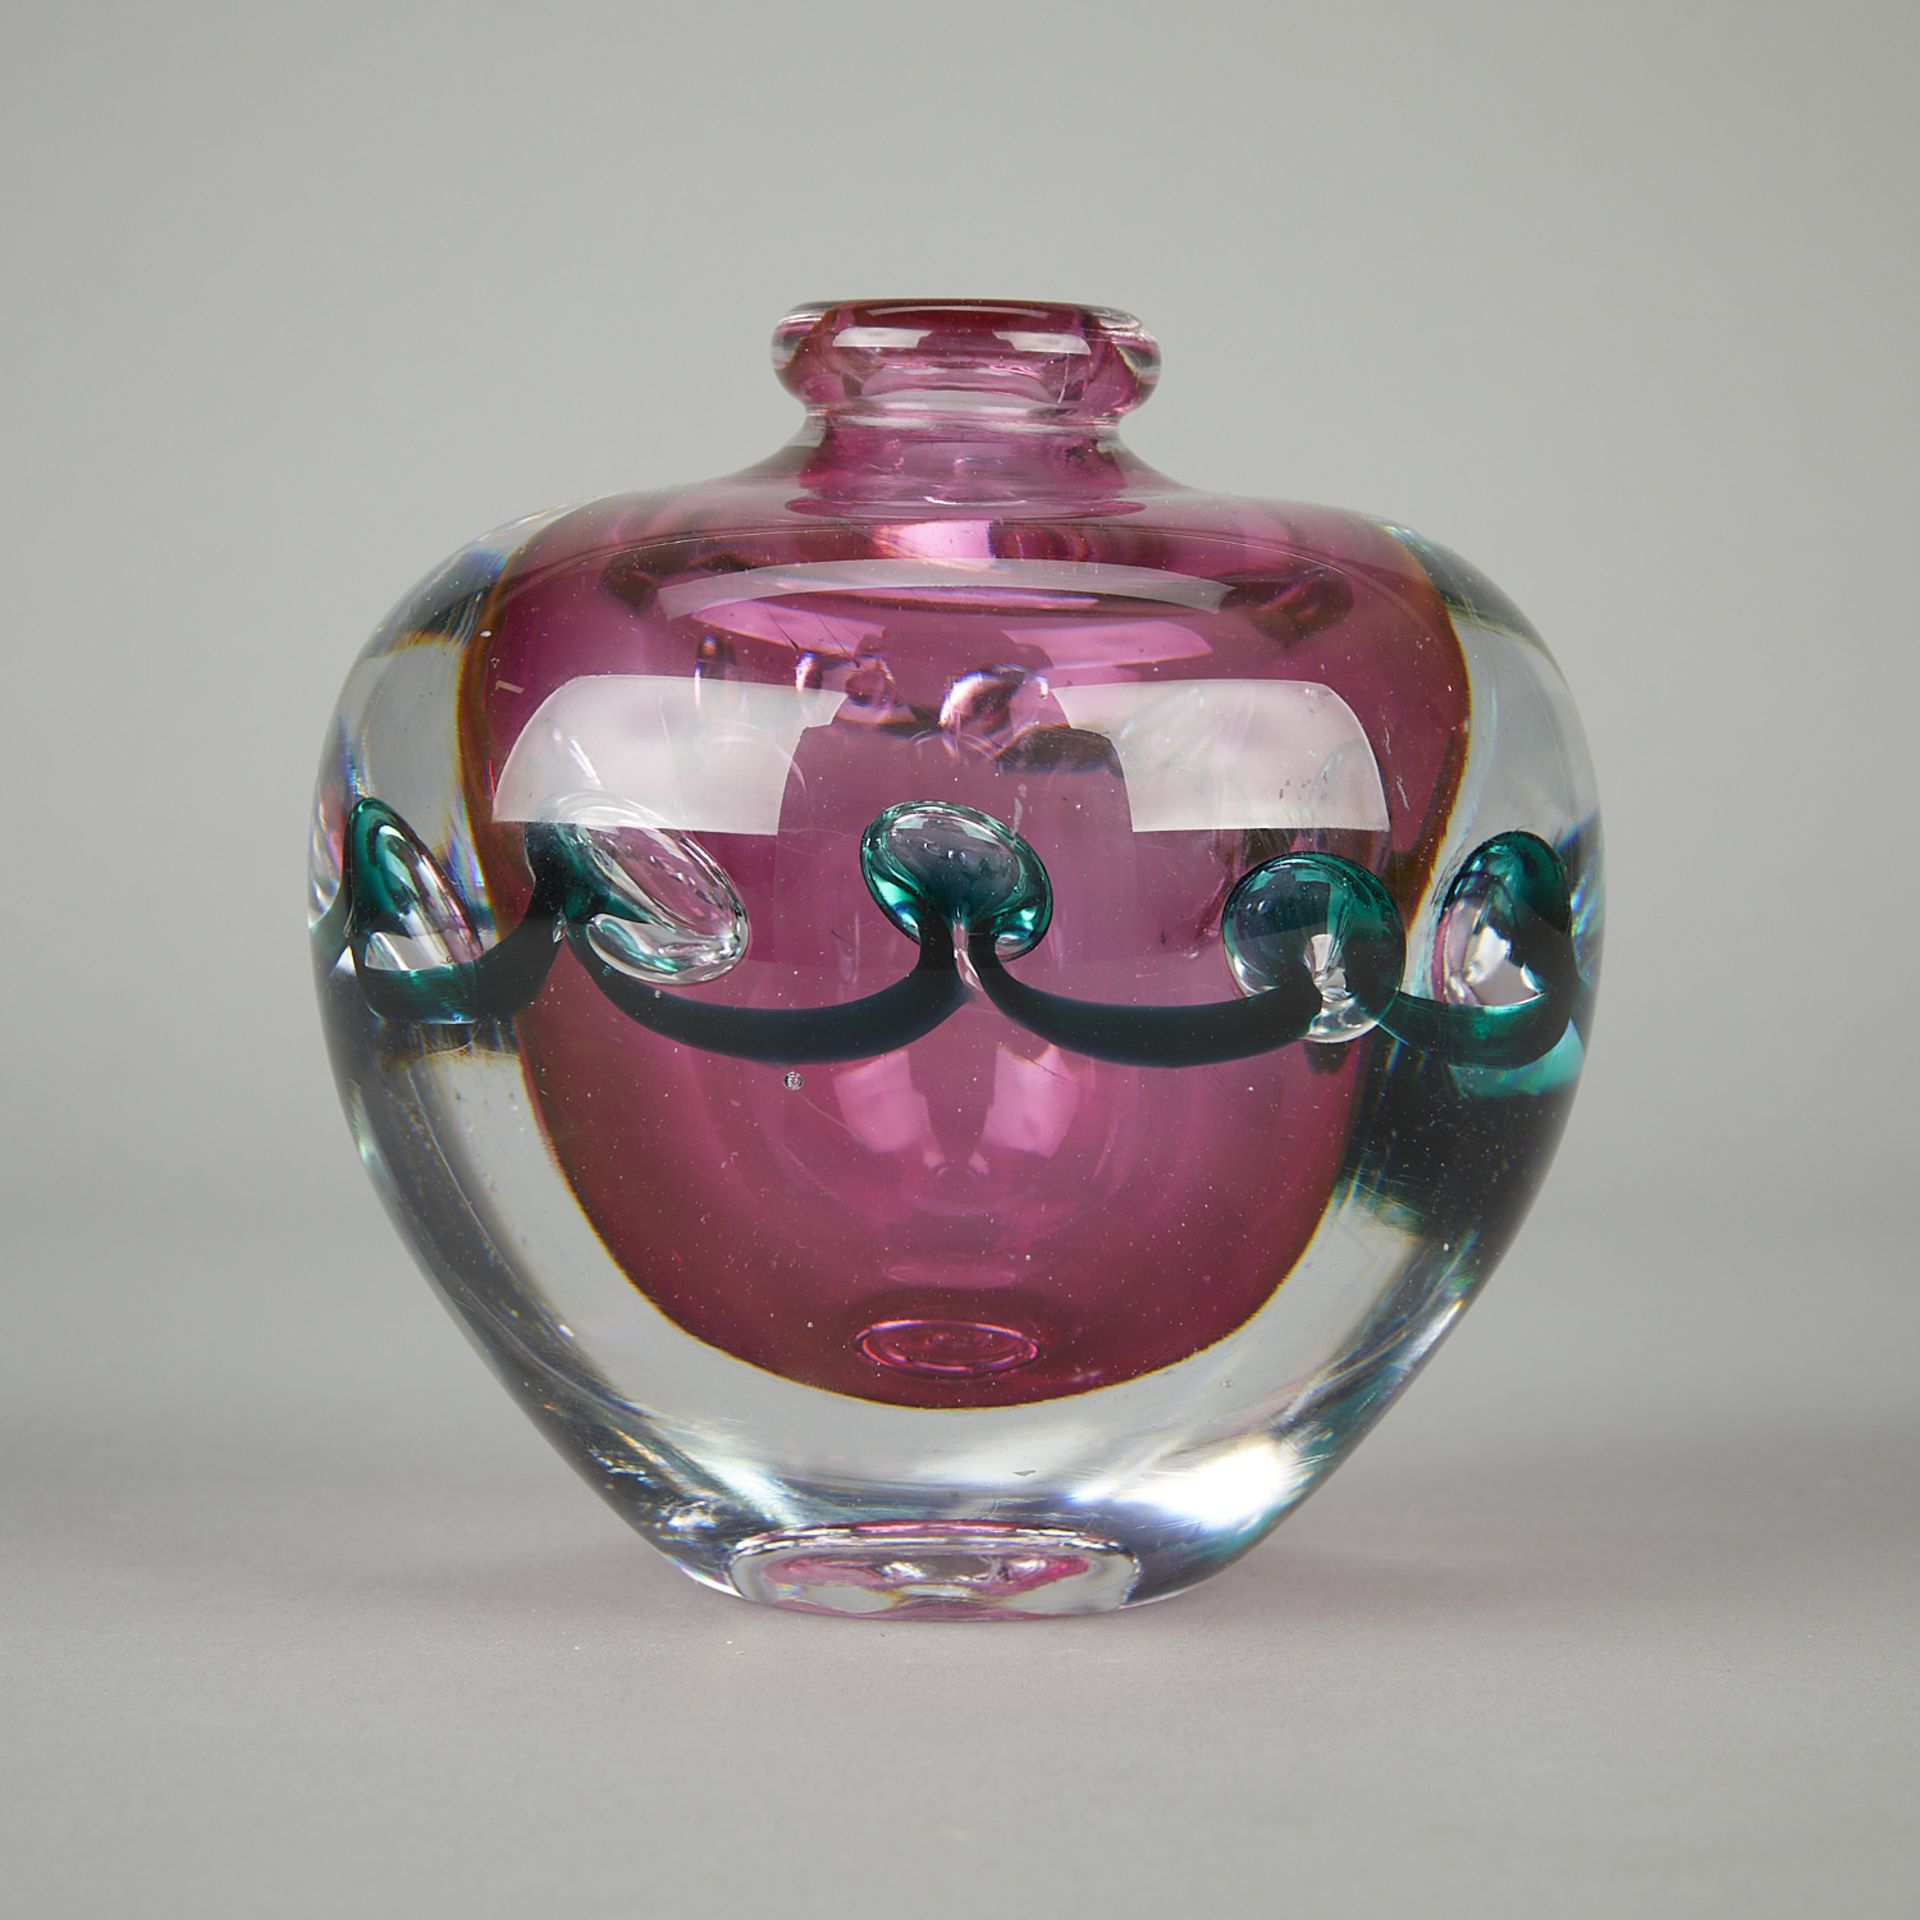 Jean-Claude Novaro Handblown Glass Vase 2000